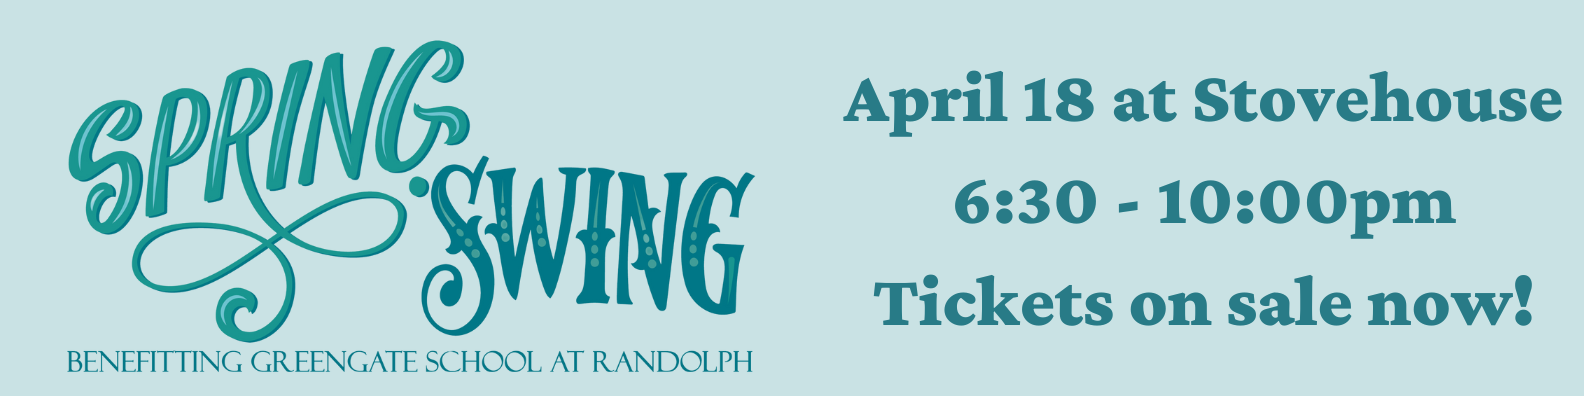 spring swing web banner (2)